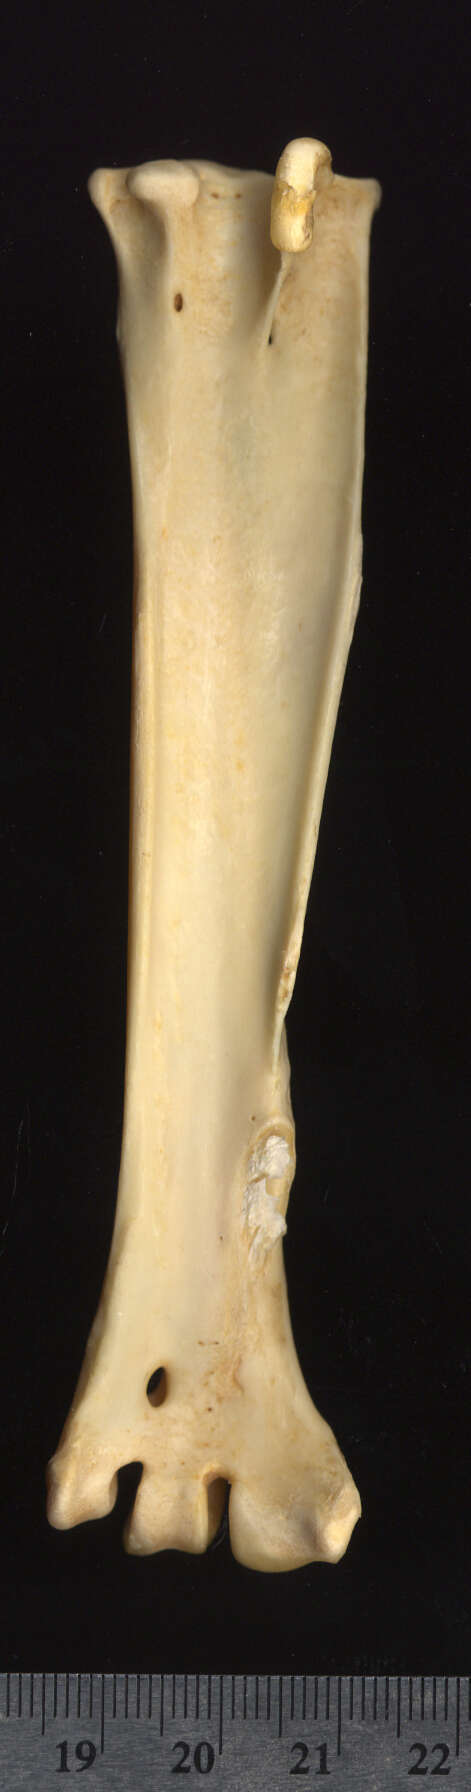 Image of Pithecophaga Ogilvie-Grant 1896